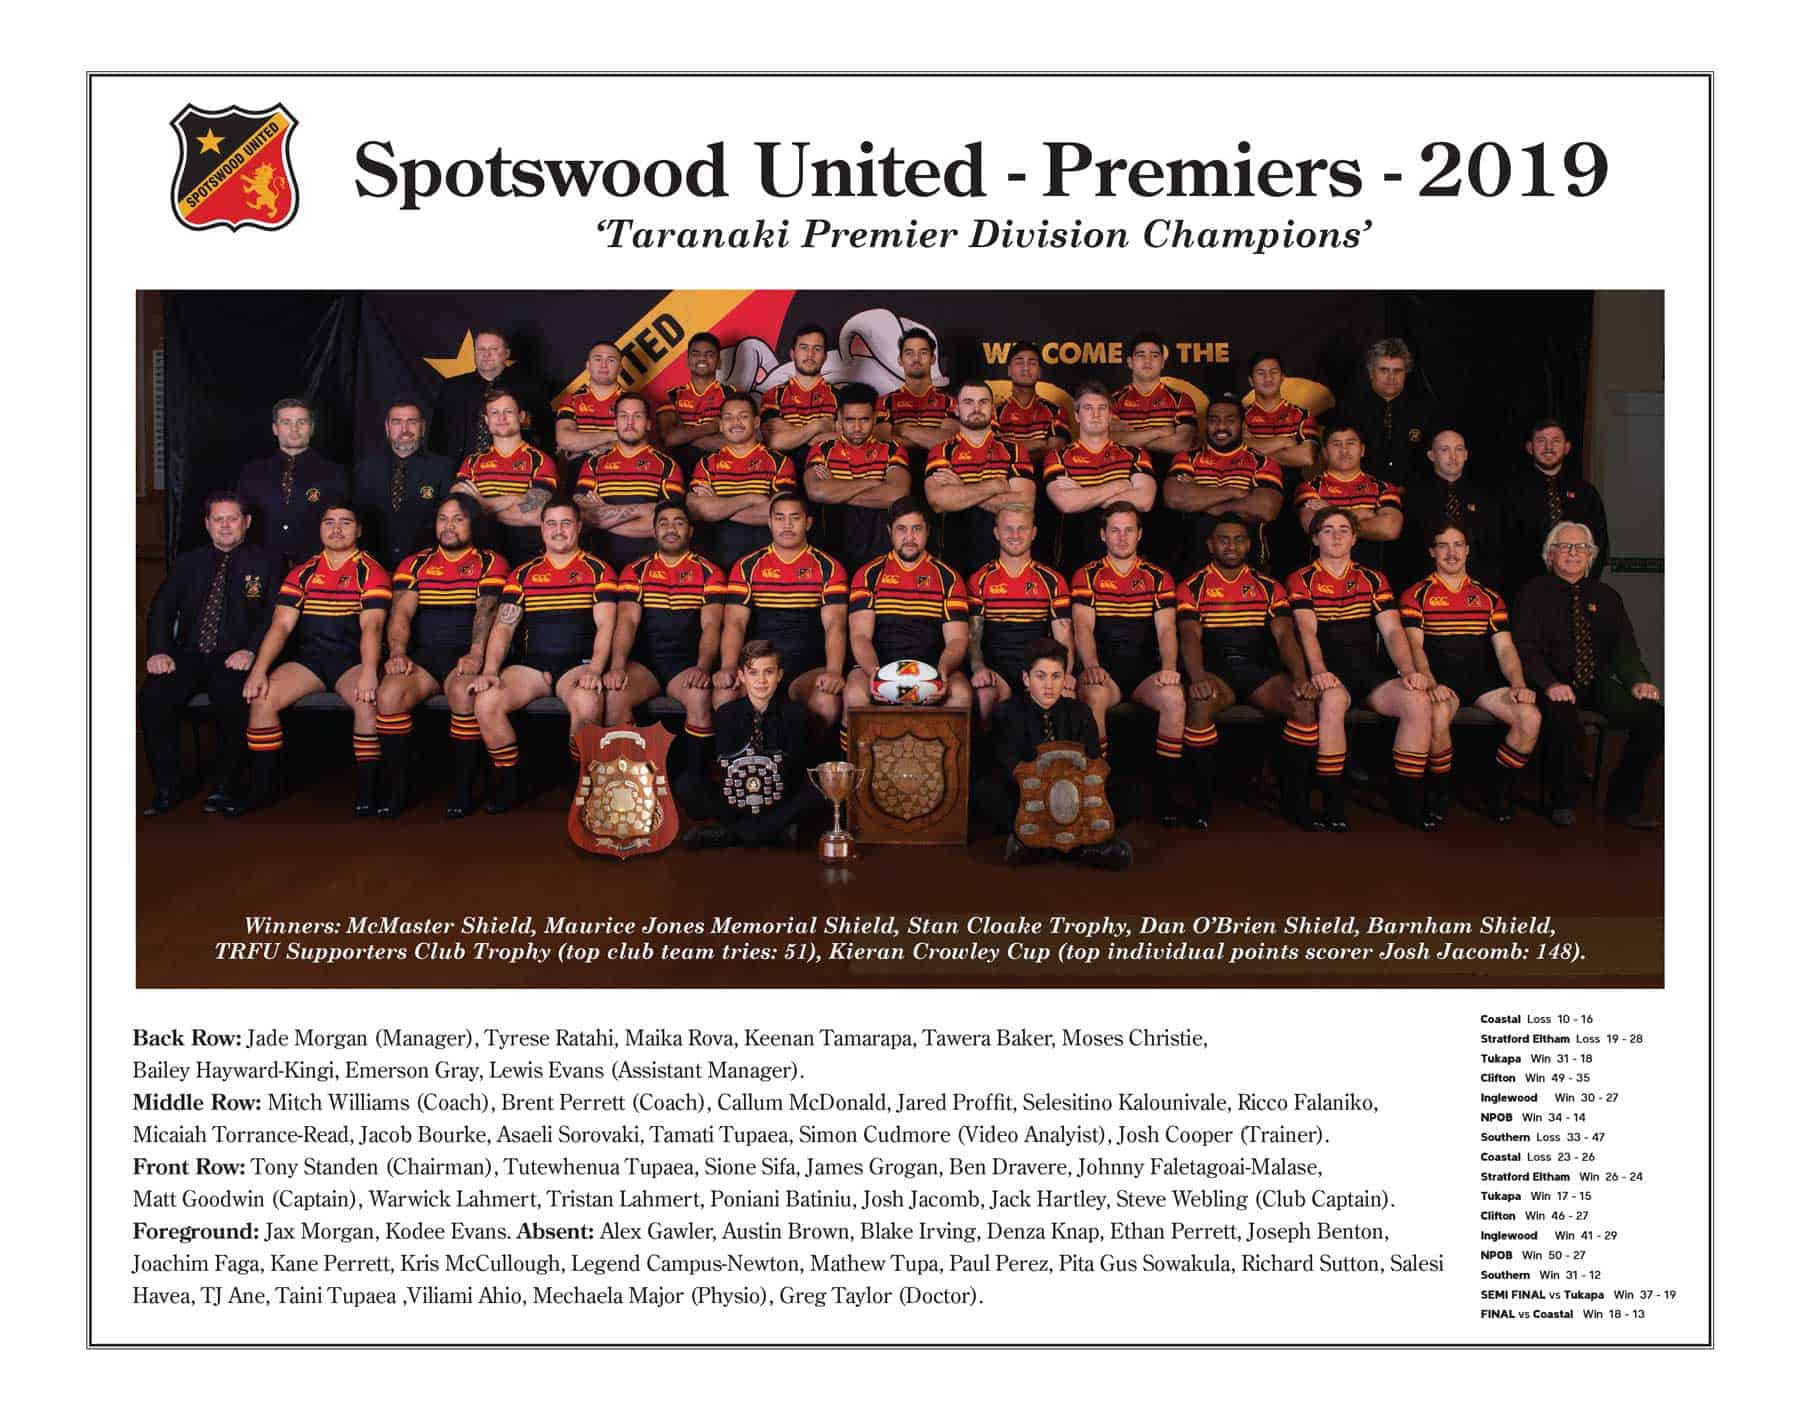 Spotswood United Premiers 2019 Club Champions